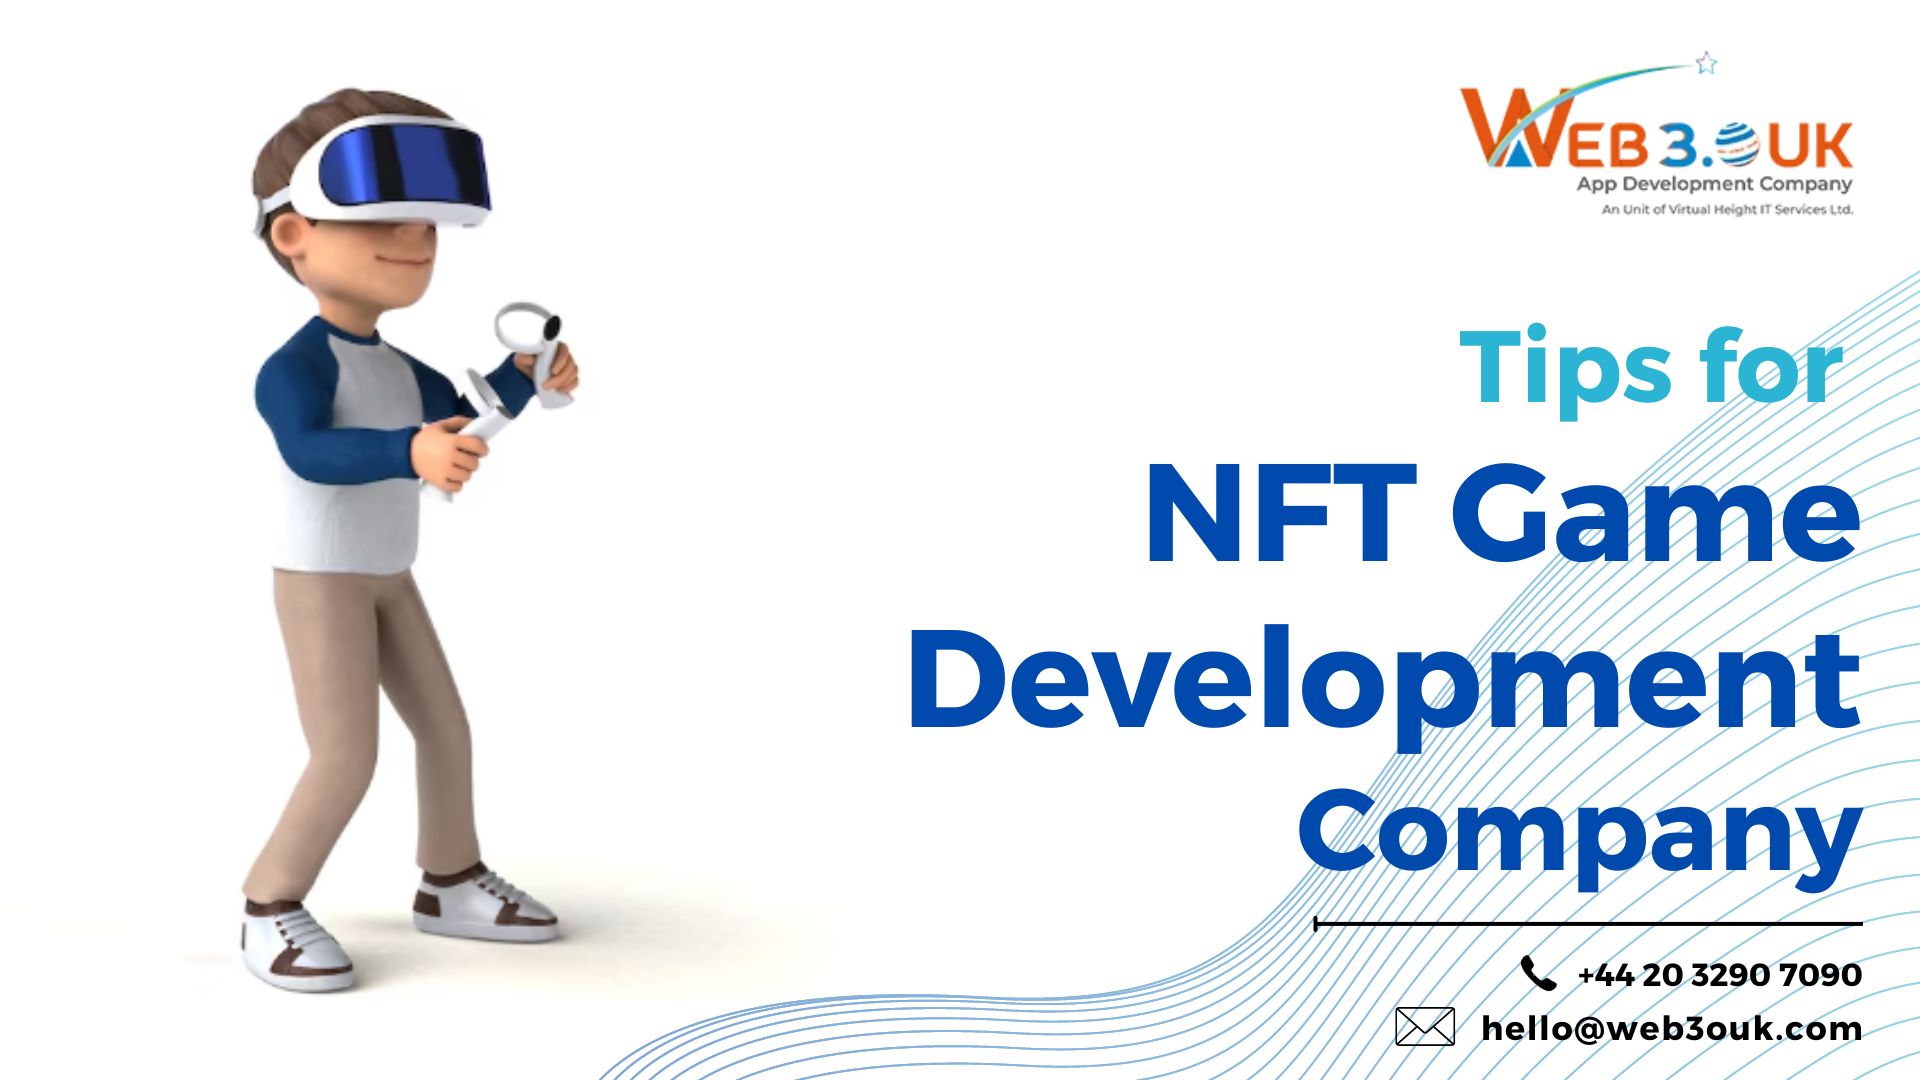 5 Insightful Tips for NFT Game Development Company